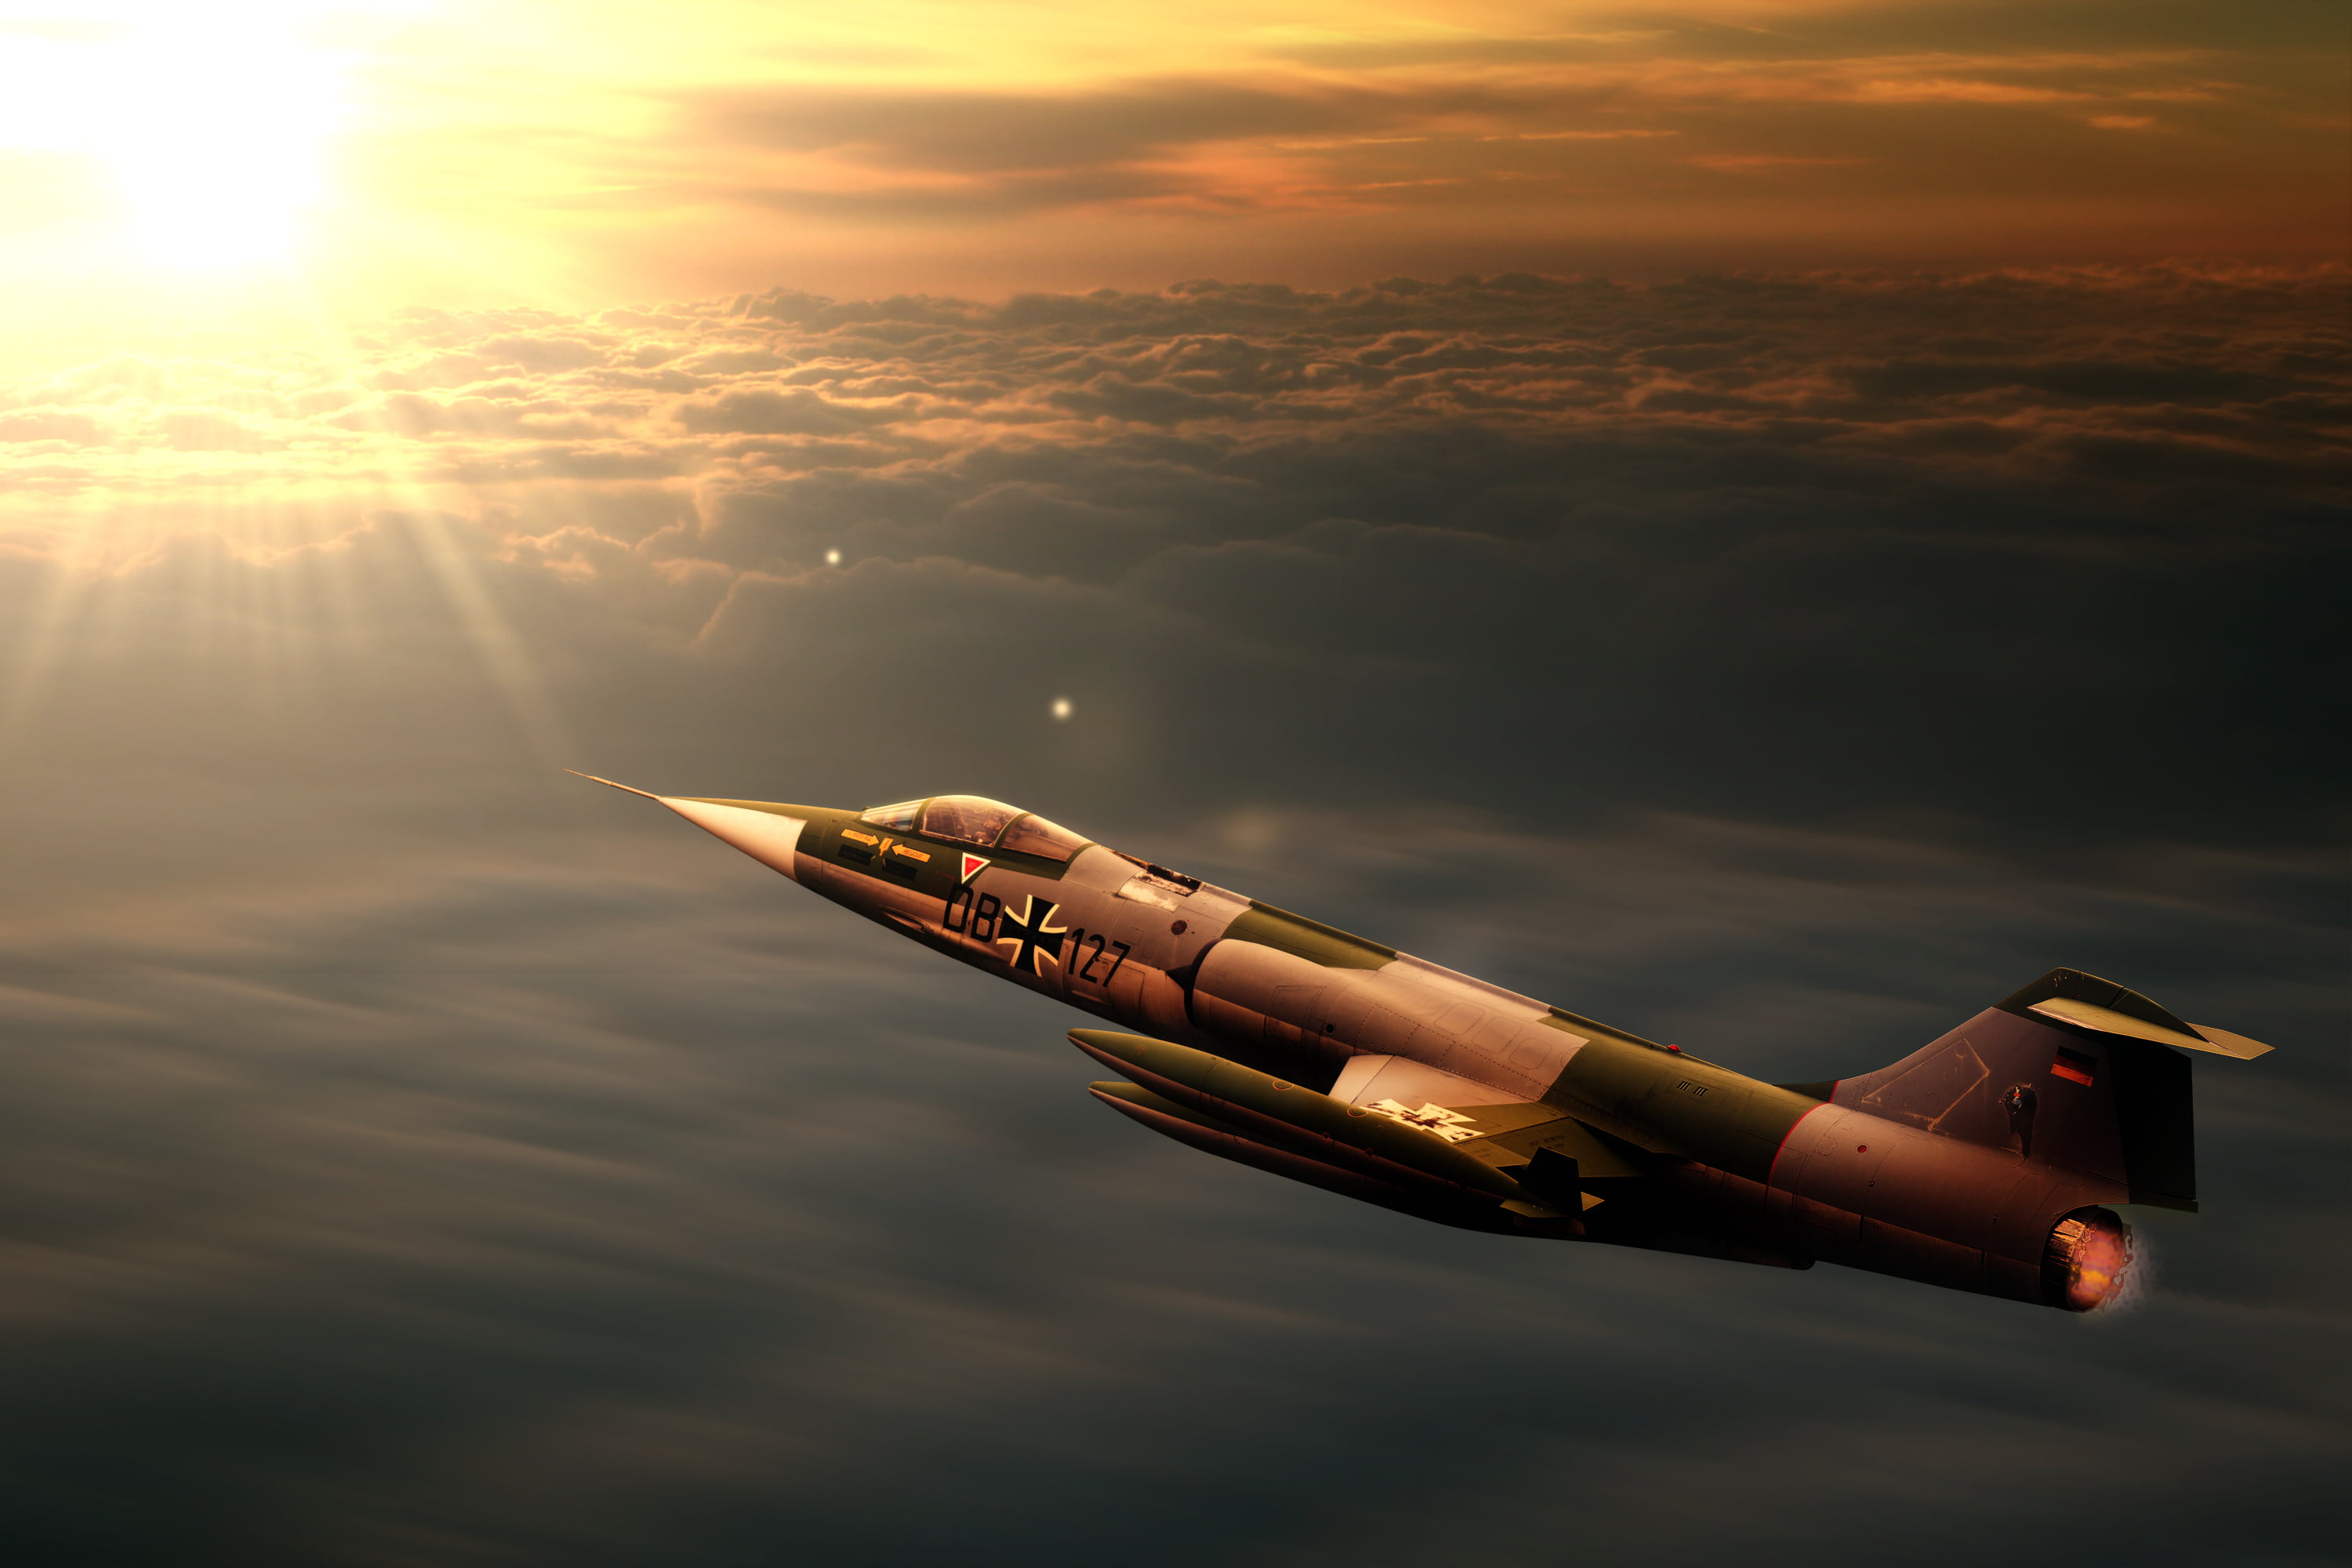 gray and black fighter plane, sunset, interceptor, f104, jet